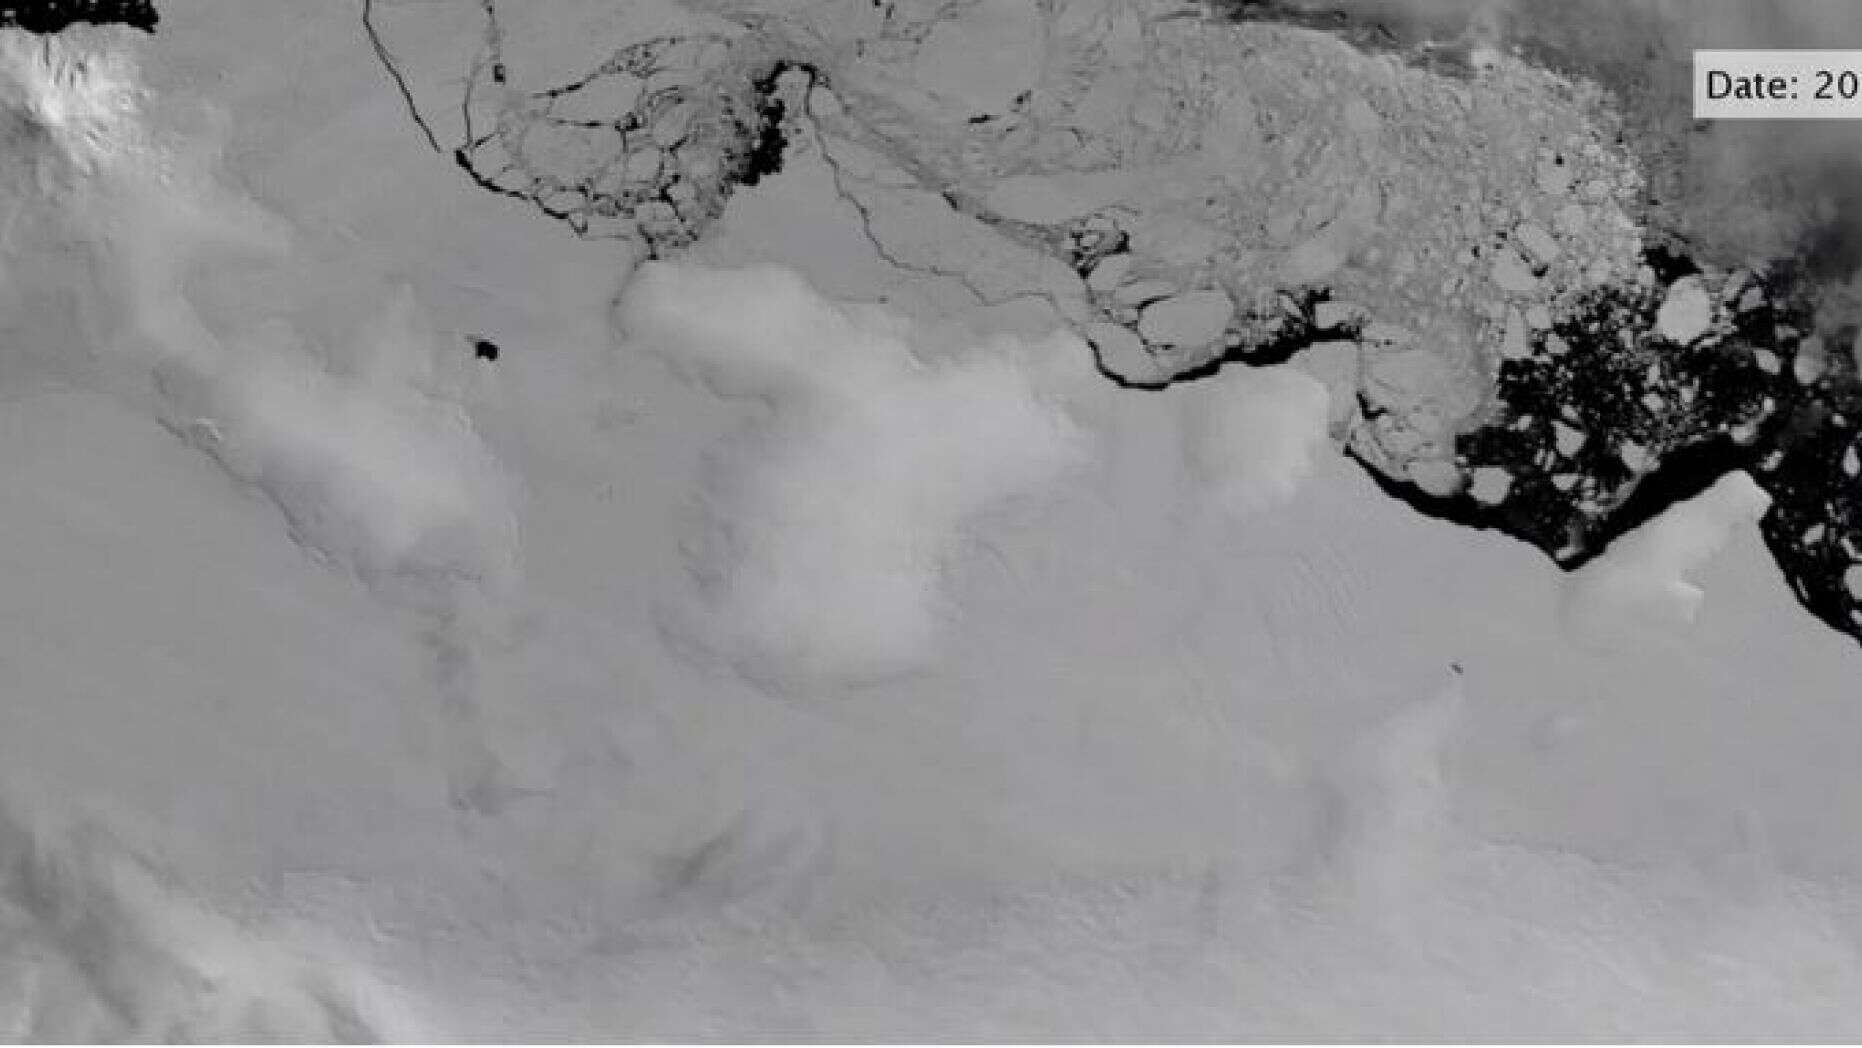 Plataformas de hielo de la Antártida debilitadas por agua tibia oceánica